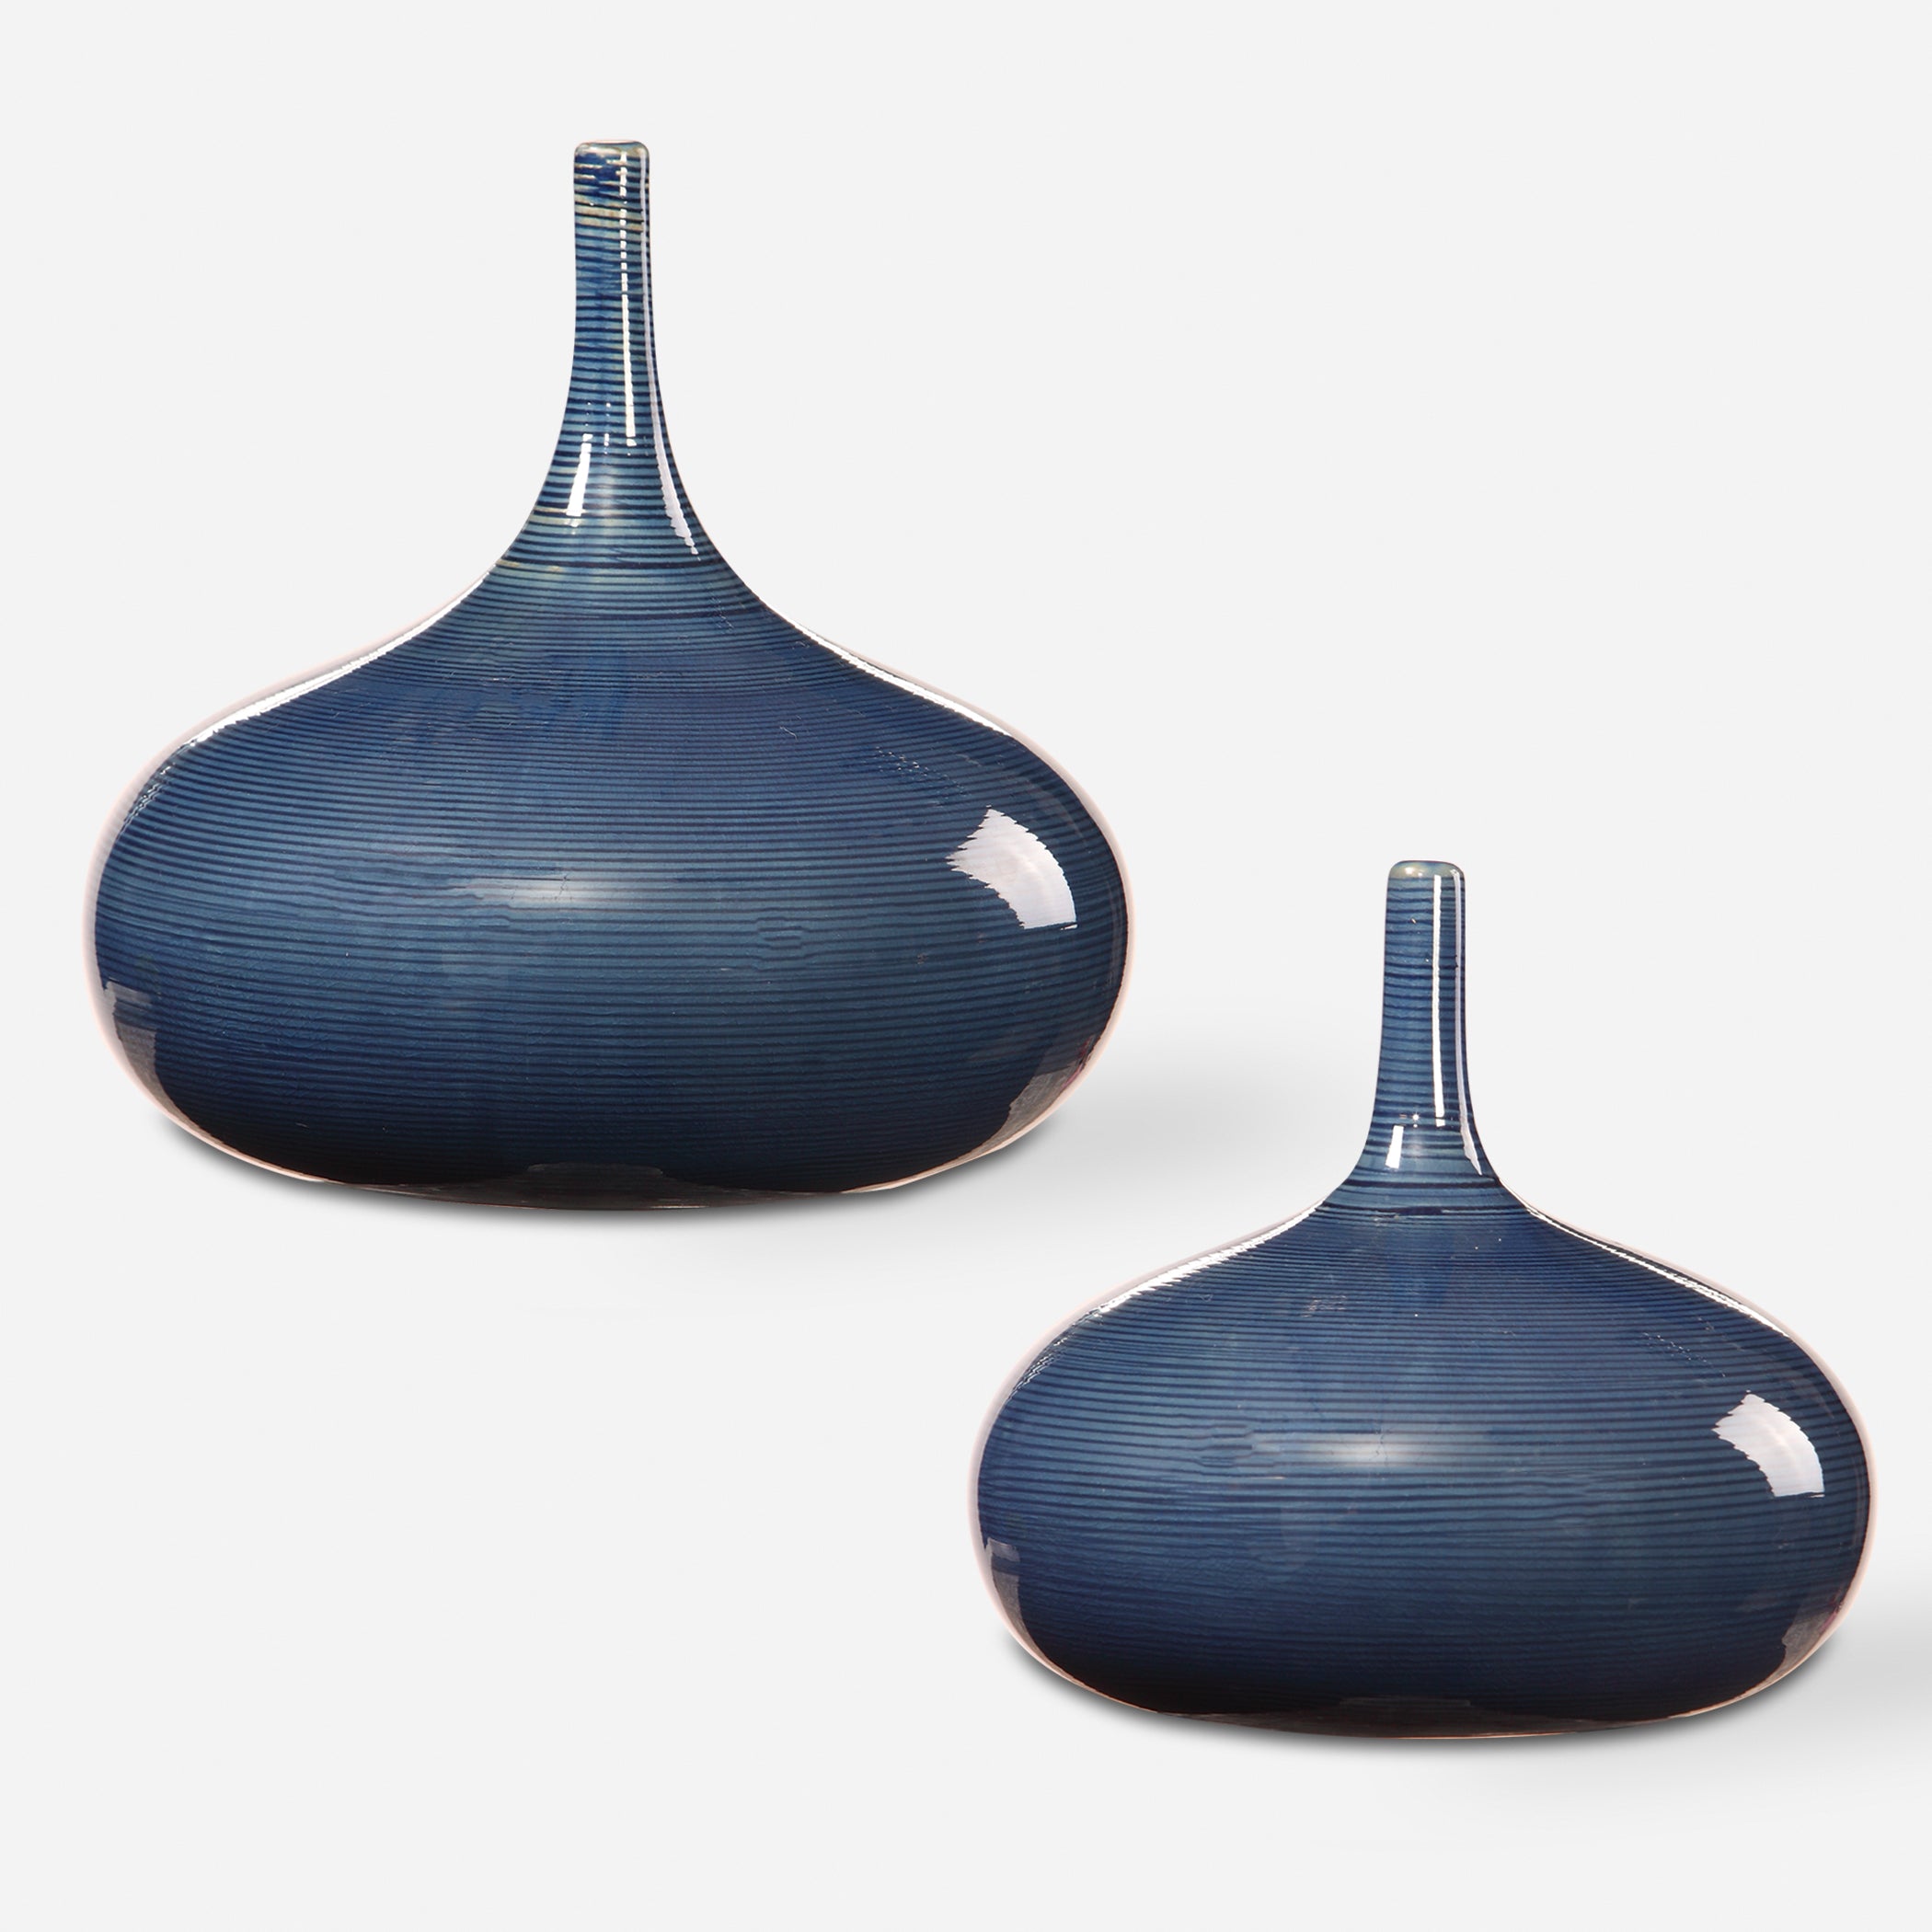 Uttermost Zayan Vases Urns & Finials Vases Urns & Finials Uttermost   